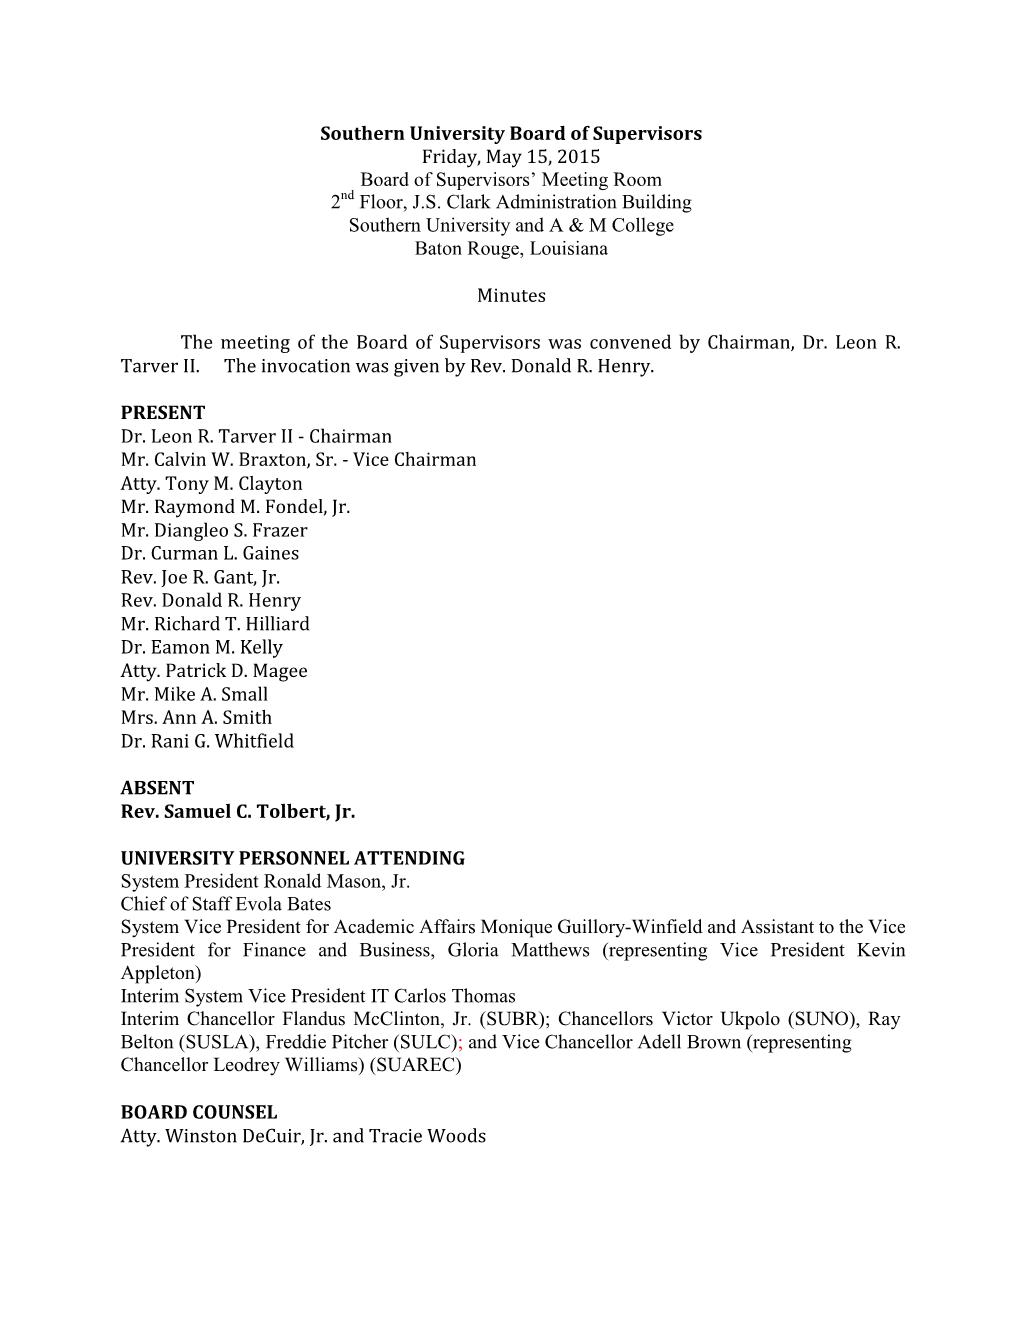 Southern University Board of Supervisors Friday, May 15, 2015 Board of Supervisors’ Meeting Room 2Nd Floor, J.S